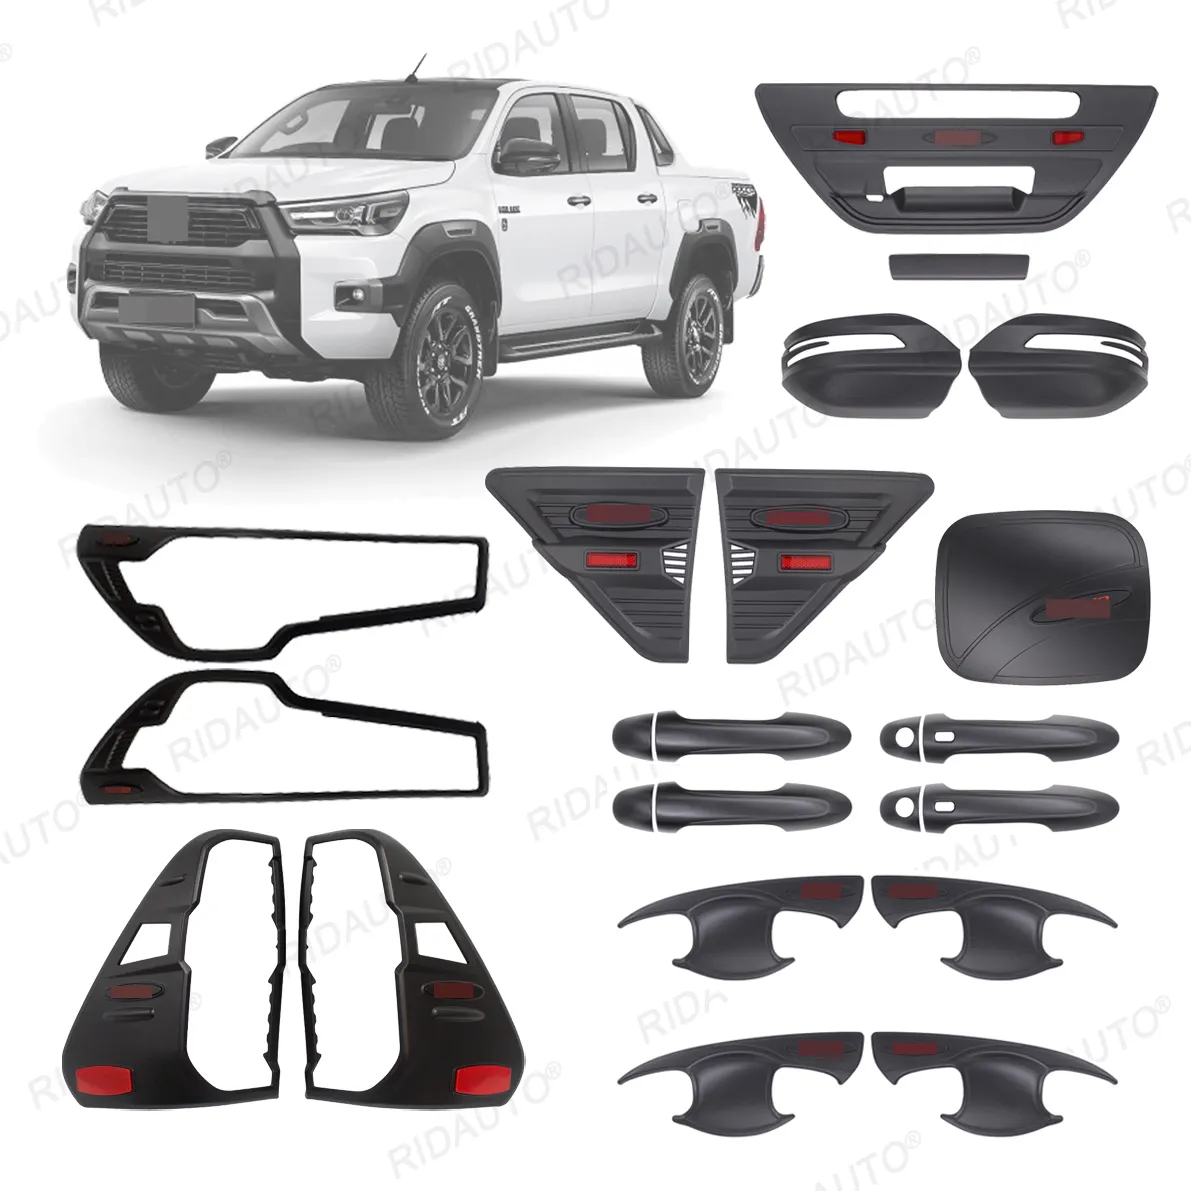 Pick Up kit bodi Off Road, aksesori modifikasi auto warna hitam Matt cocok untuk Toyota Hilux 2020-2023